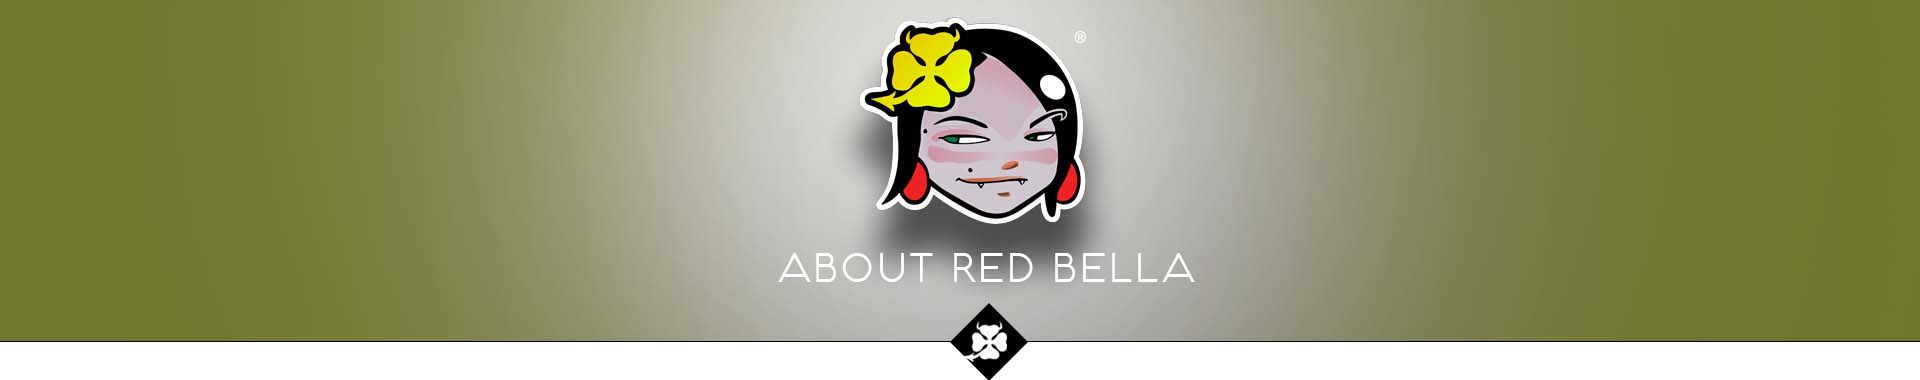 Redbella Italian Graphic novels